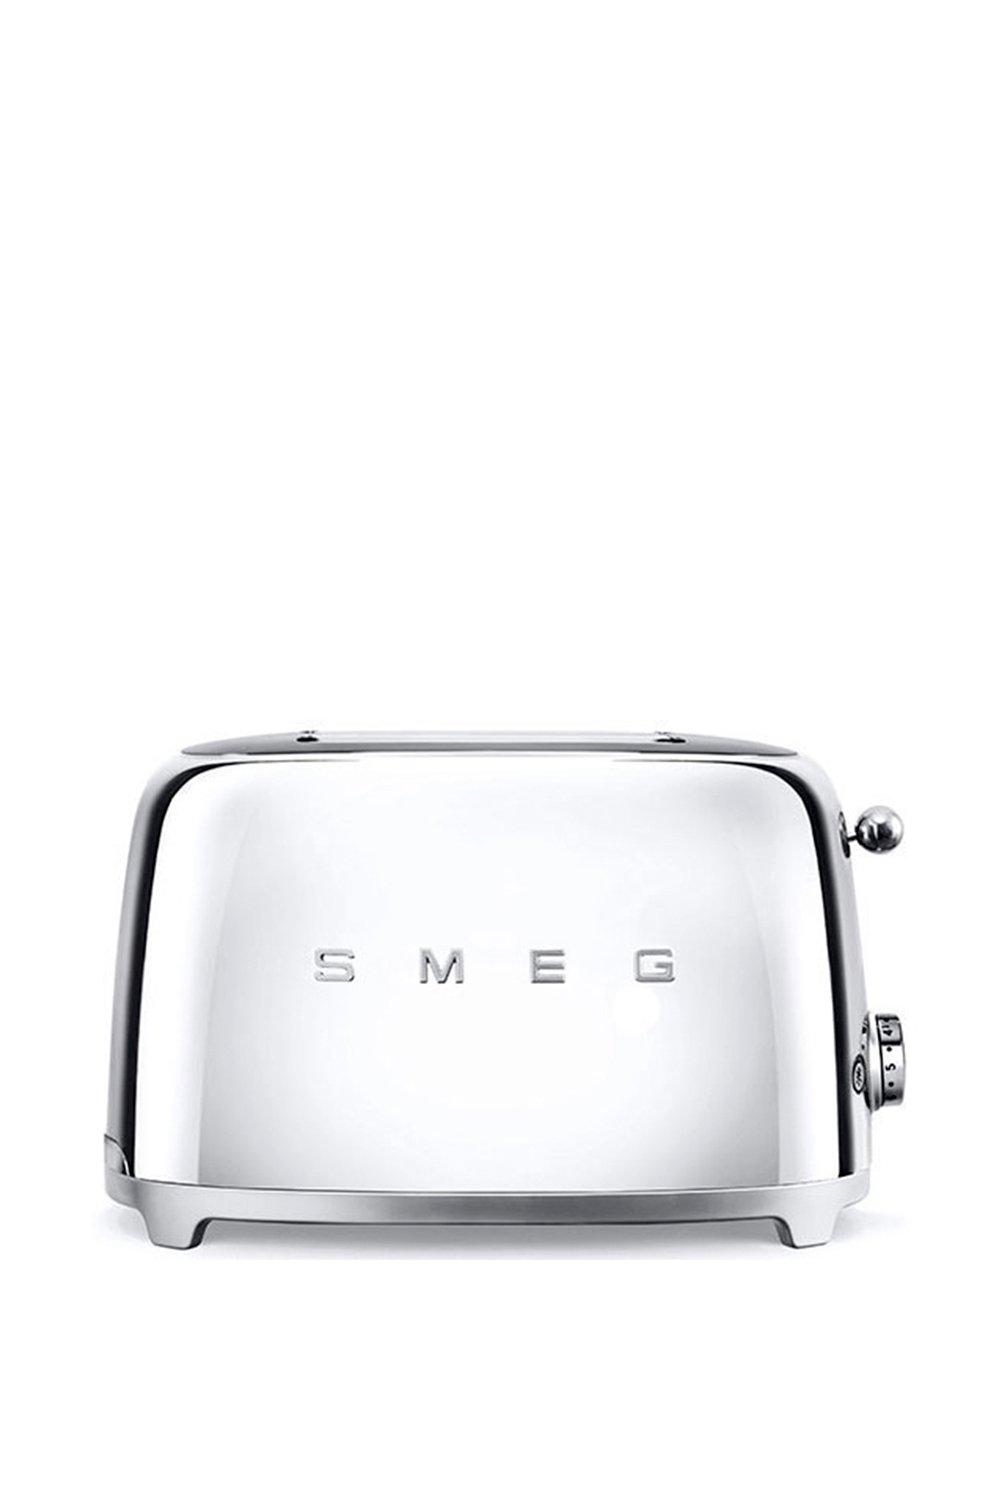 950W 2 Slice Toaster